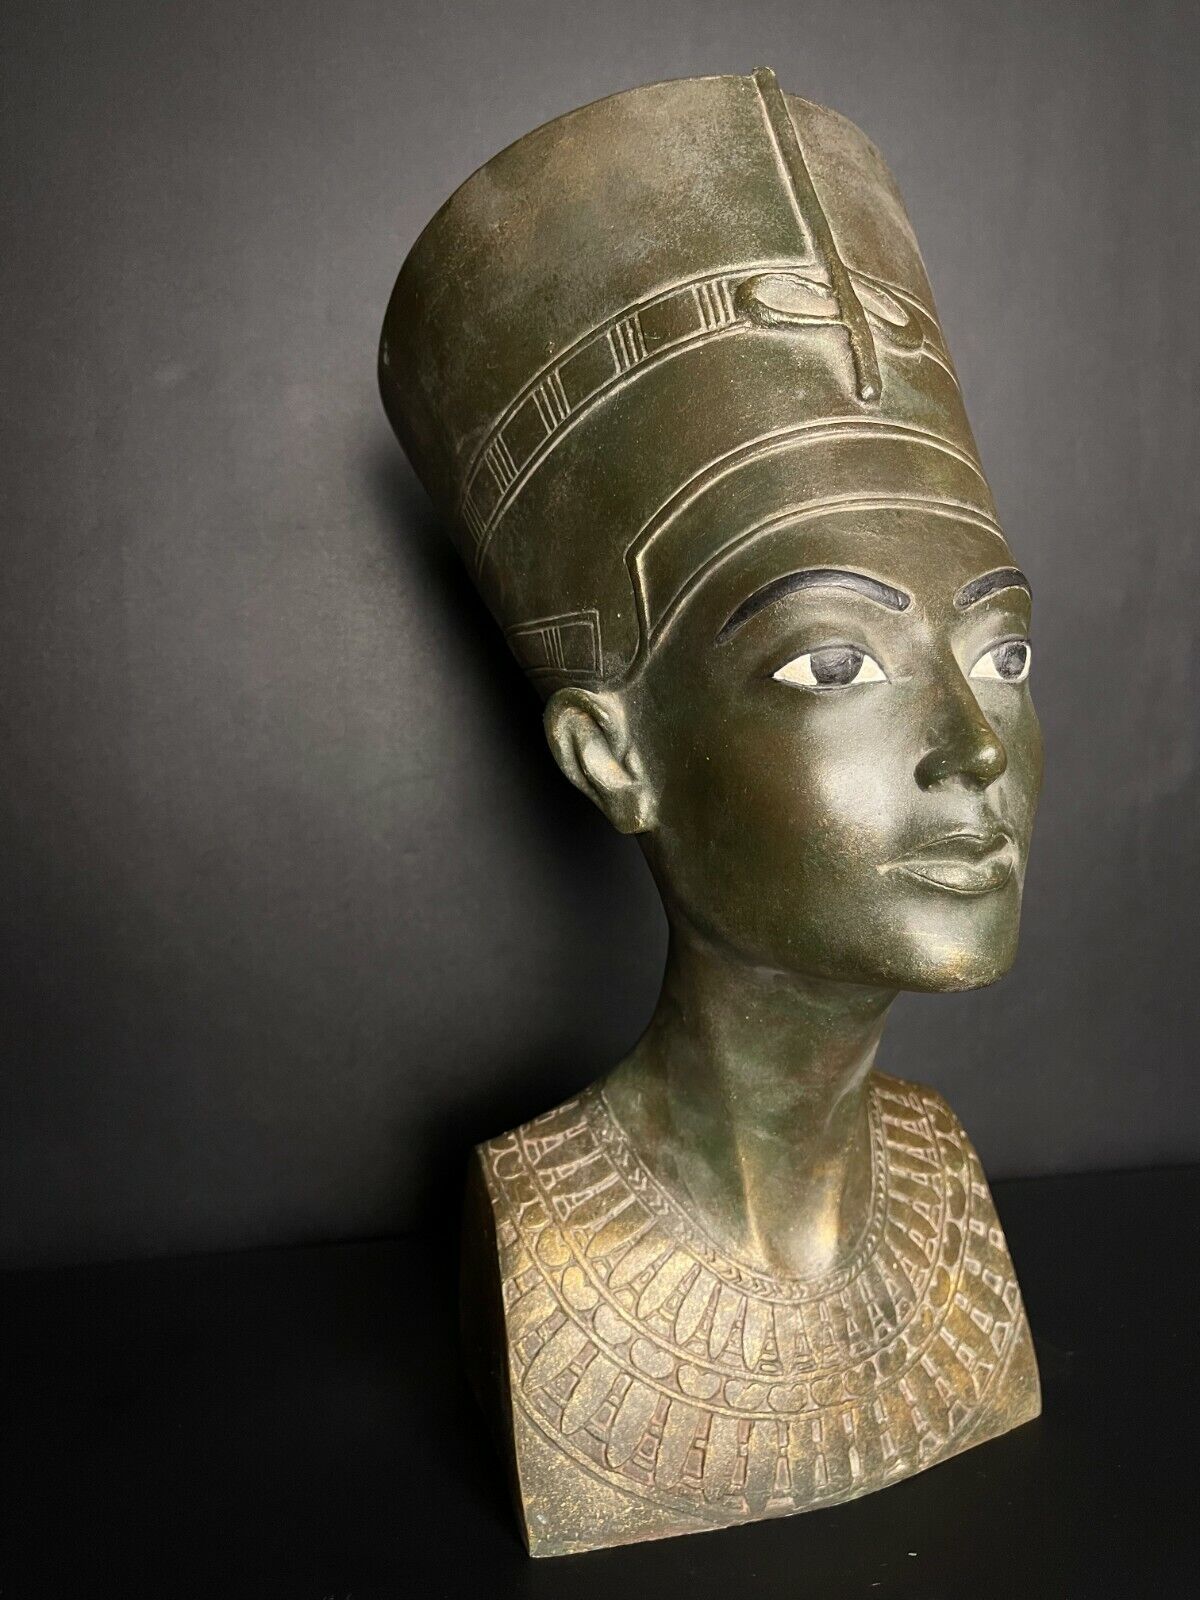 Large Head of Queen NEFERTITI the Royal Spouse of Akhenaten made of Heavy stone